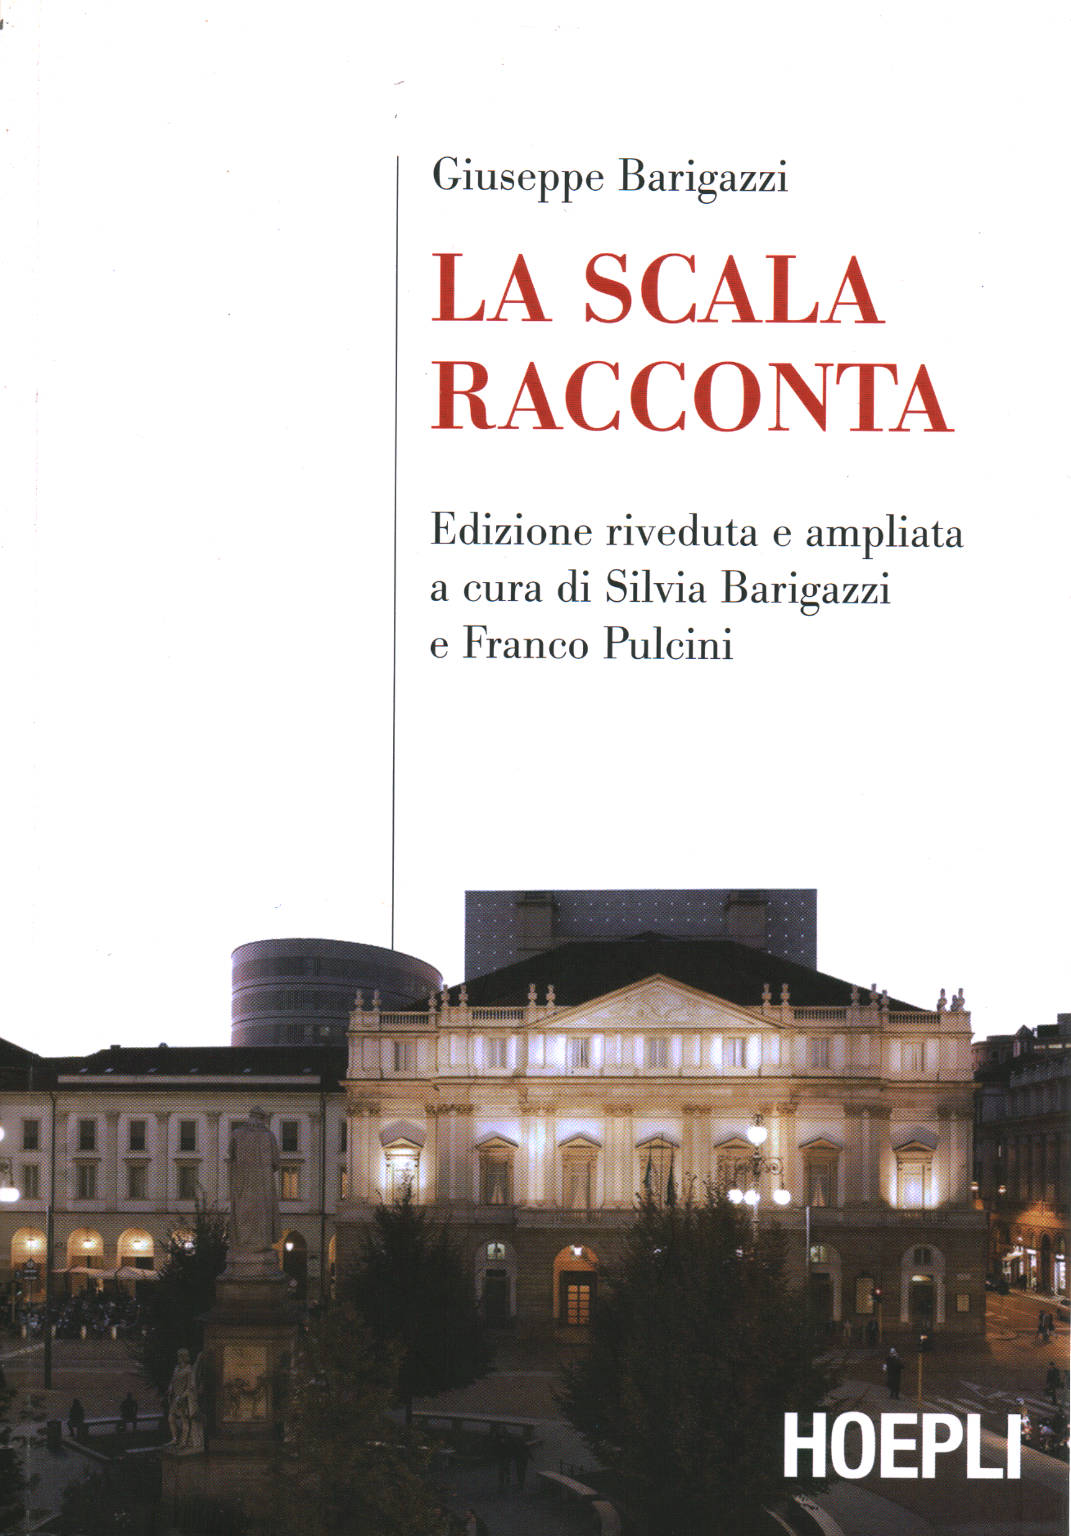 The Scale tells the story, Giuseppe Barigazzi